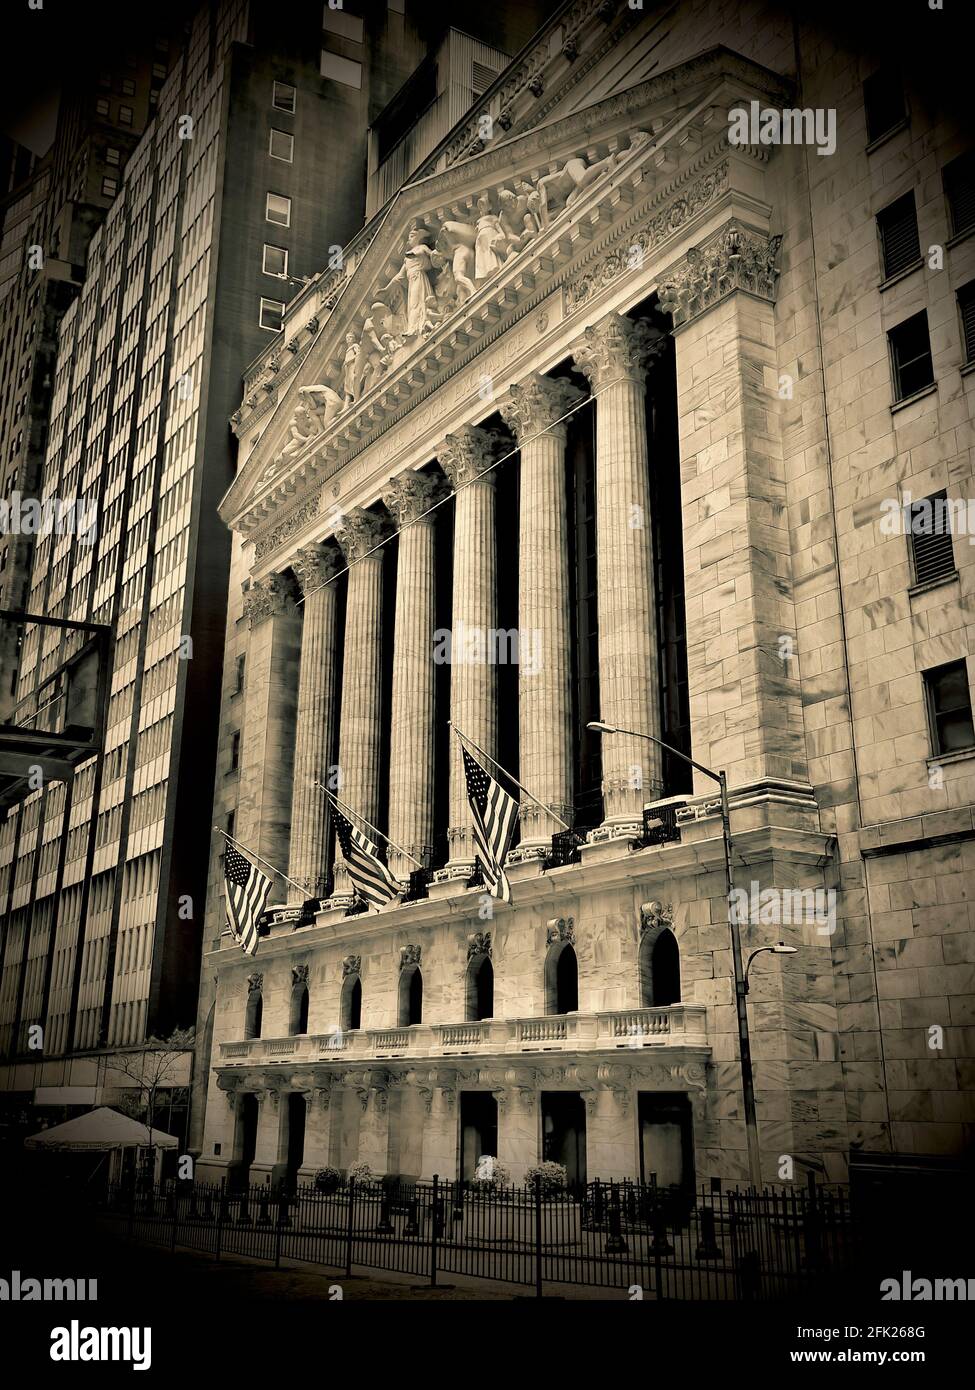 New York Stock Exchange building facade in lower Manhattan’s Financial District. Stock Photo